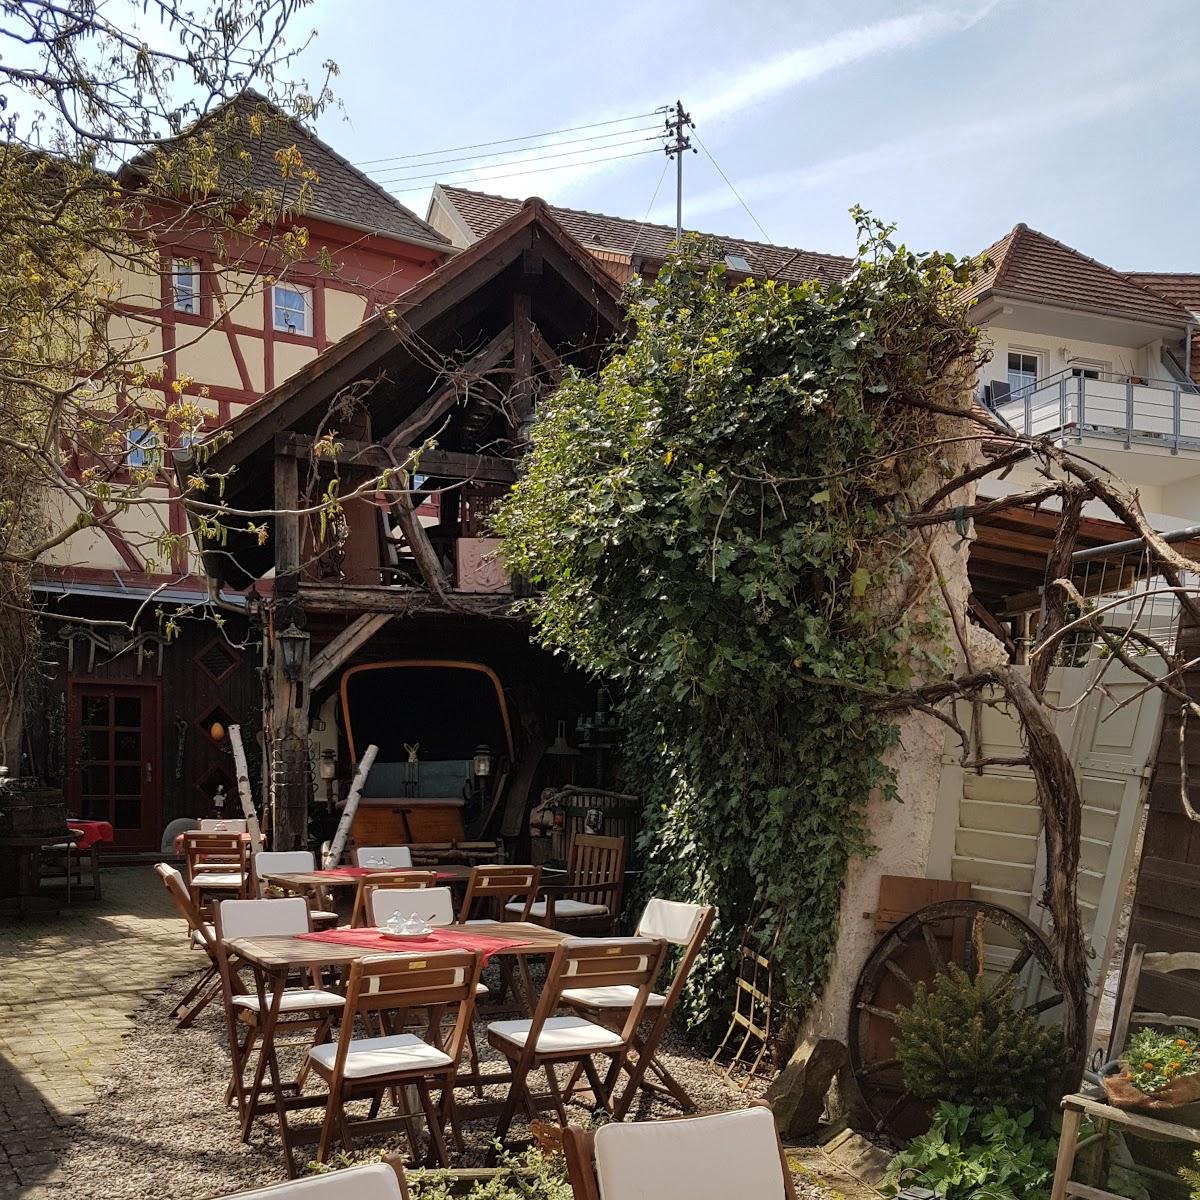 Restaurant "walnuss teegARTen" in Endingen am Kaiserstuhl